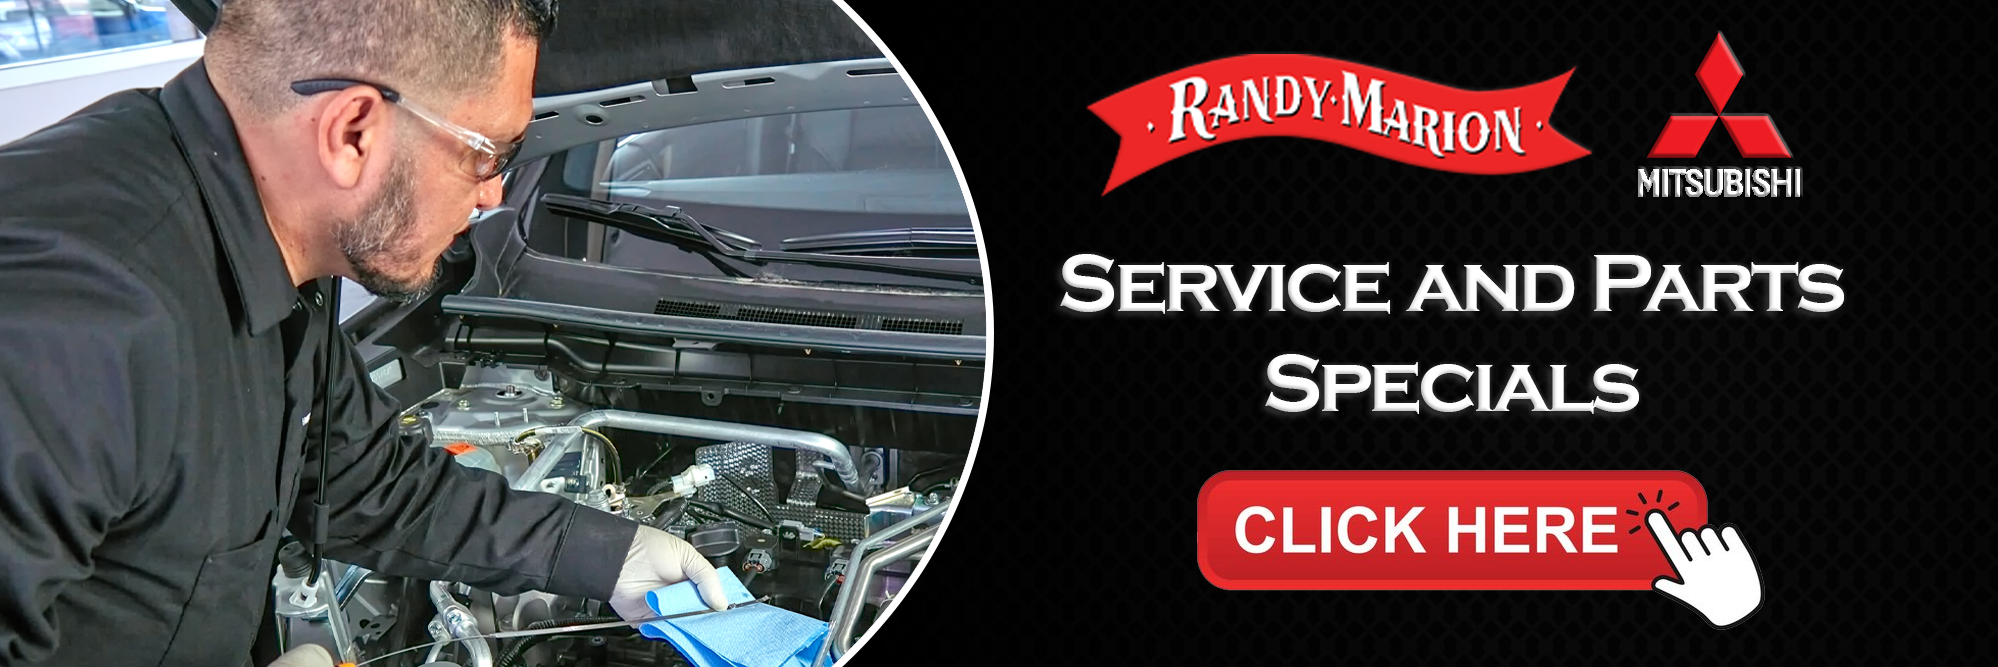 service and parts specials